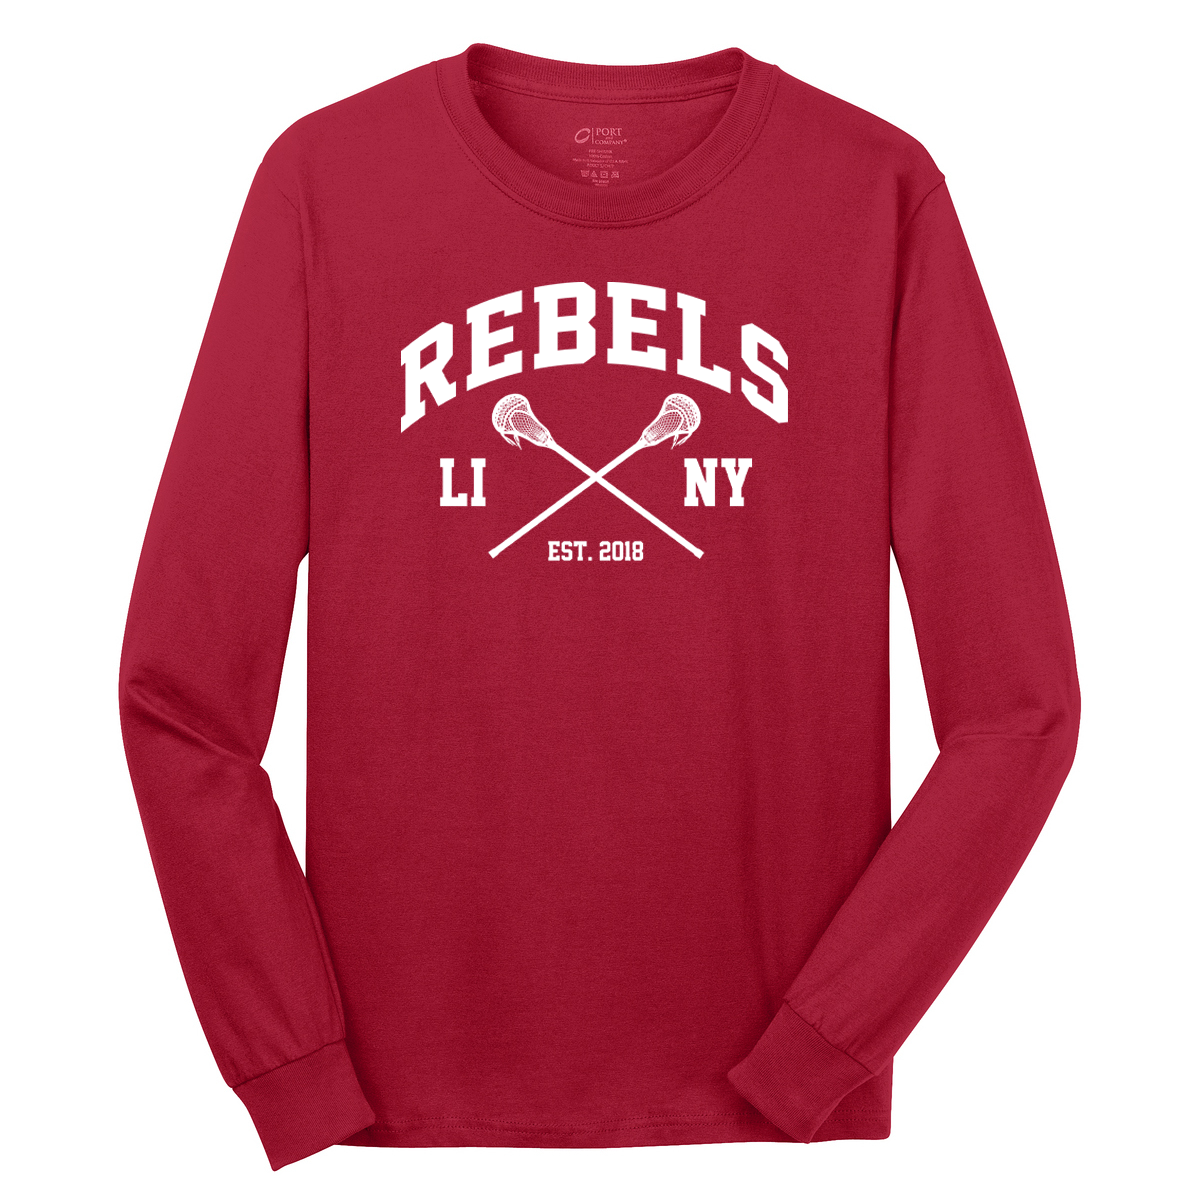 Rebels Lacrosse Cotton Long Sleeve Shirt